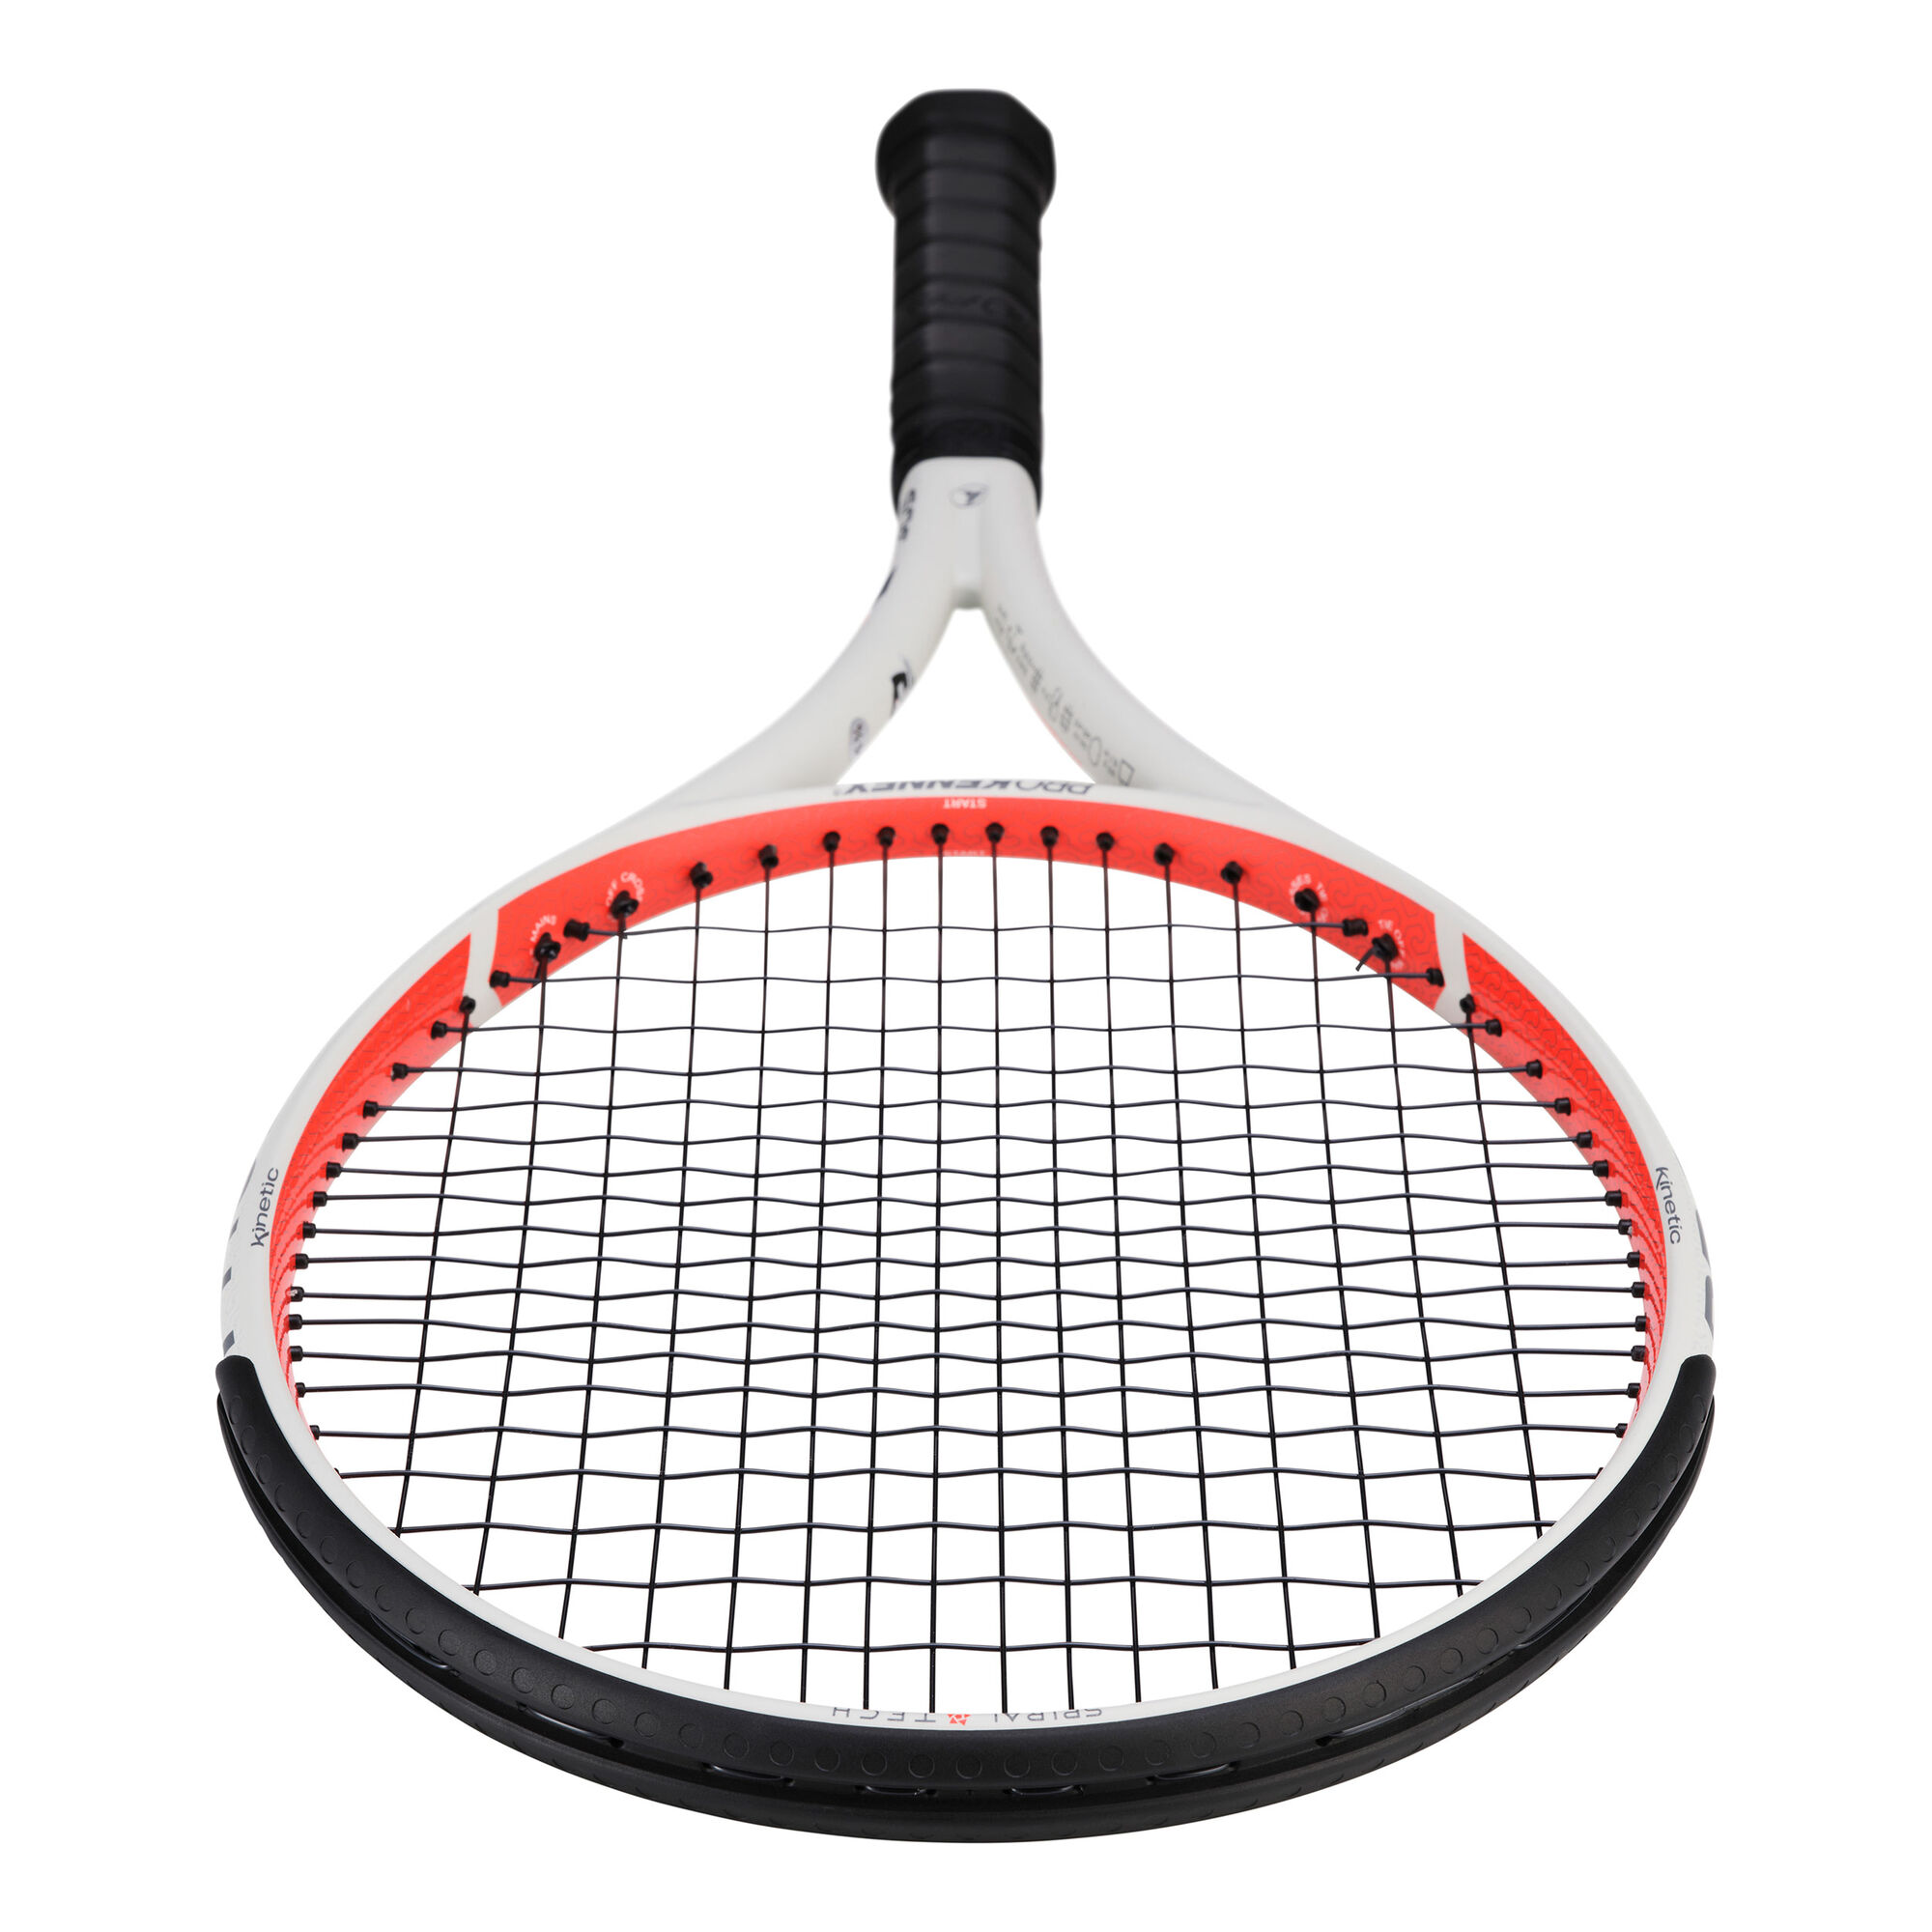 | (305g) 10 online COM PROKENNEX Point Tennis Buy Kinetic